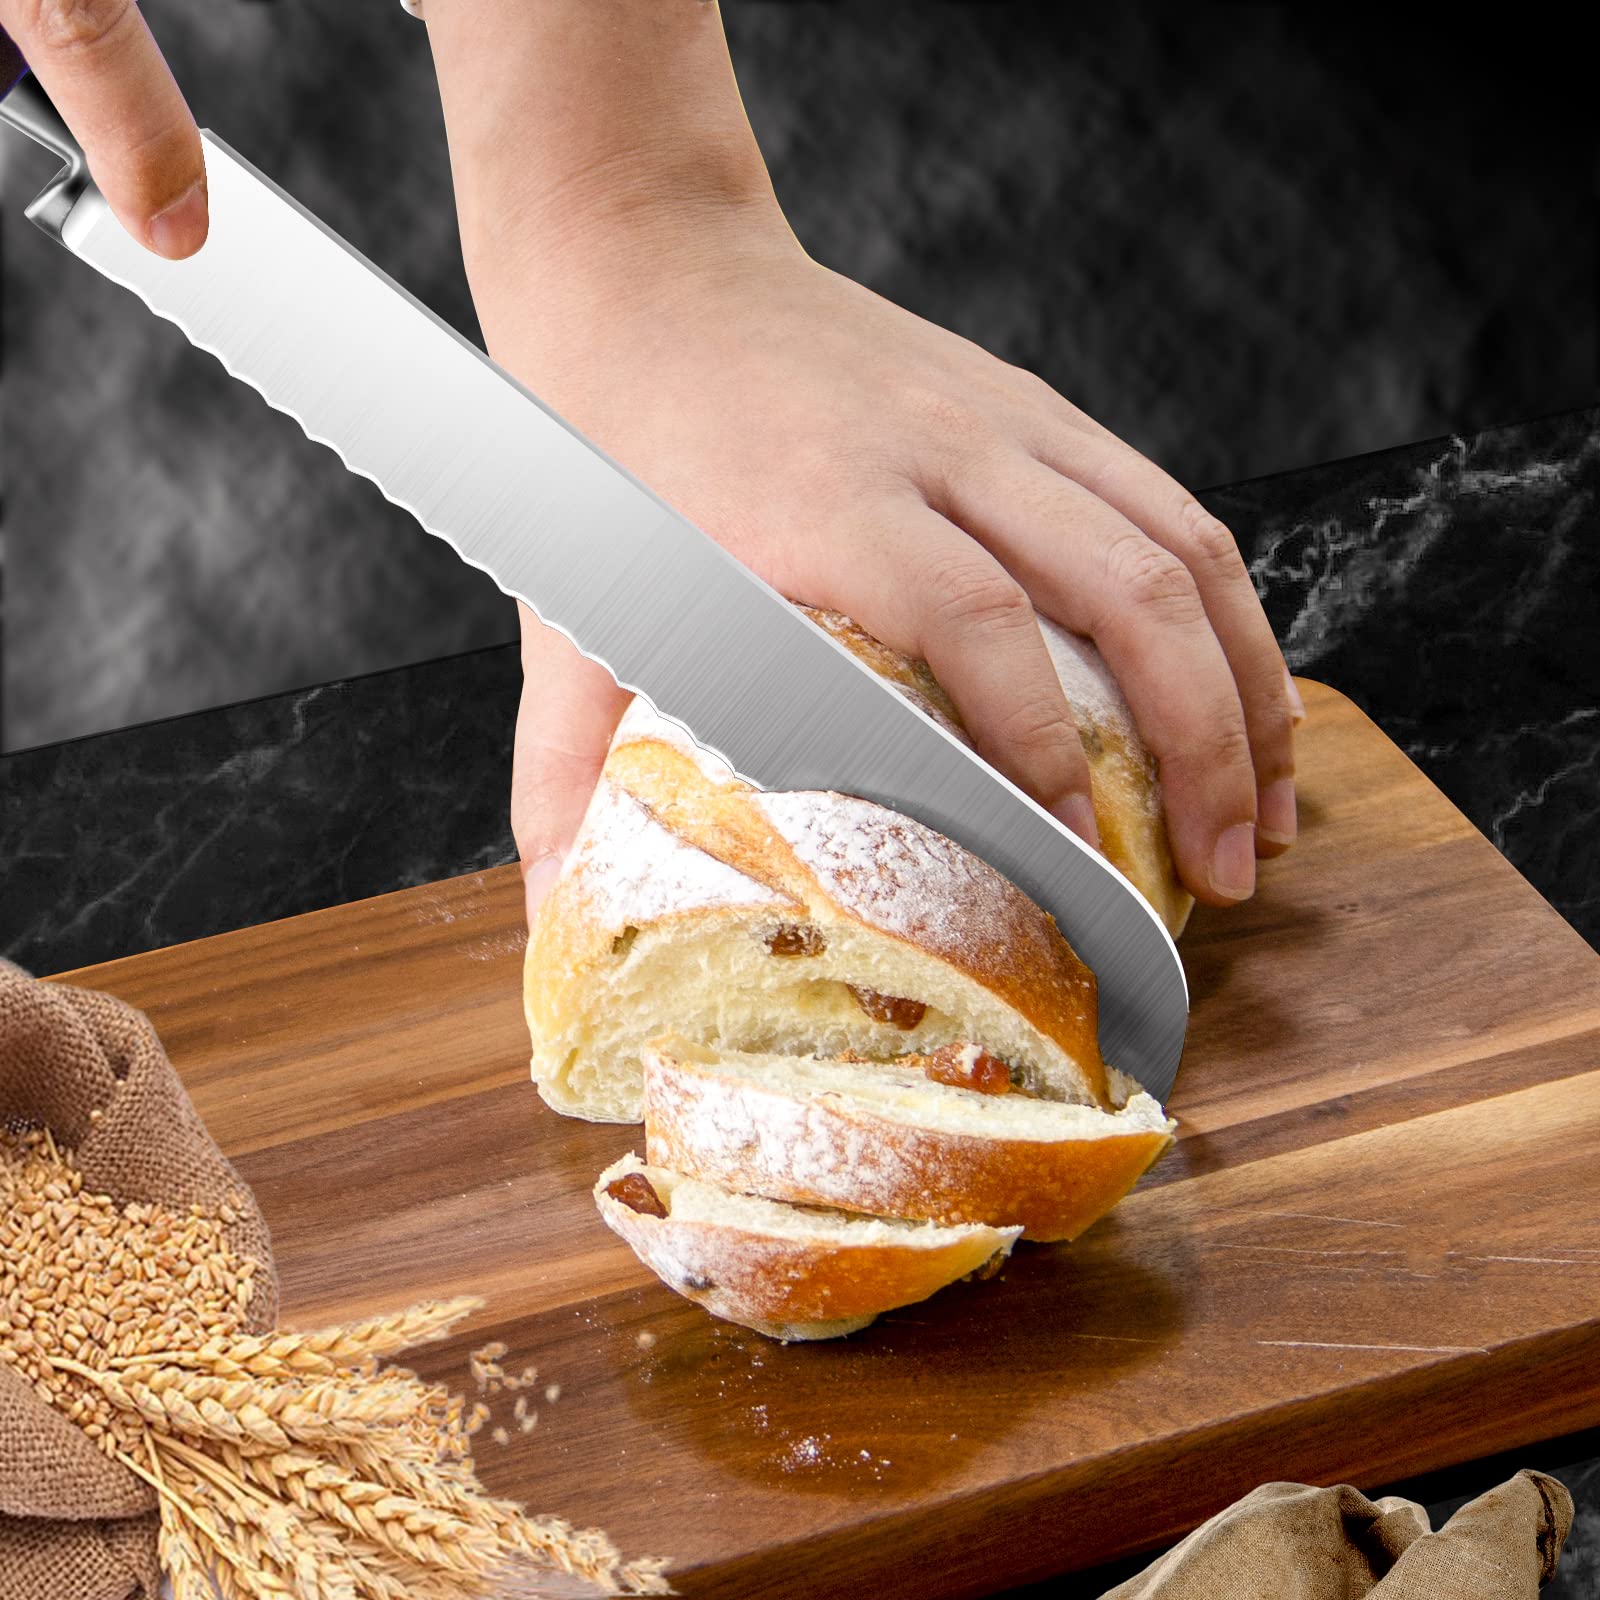 CHILLKET Bread Knife, Bread Slicer for homemade bread, 8 inch Serrated Knife for Crusty Bread, Sandwich, Cake, Bagels